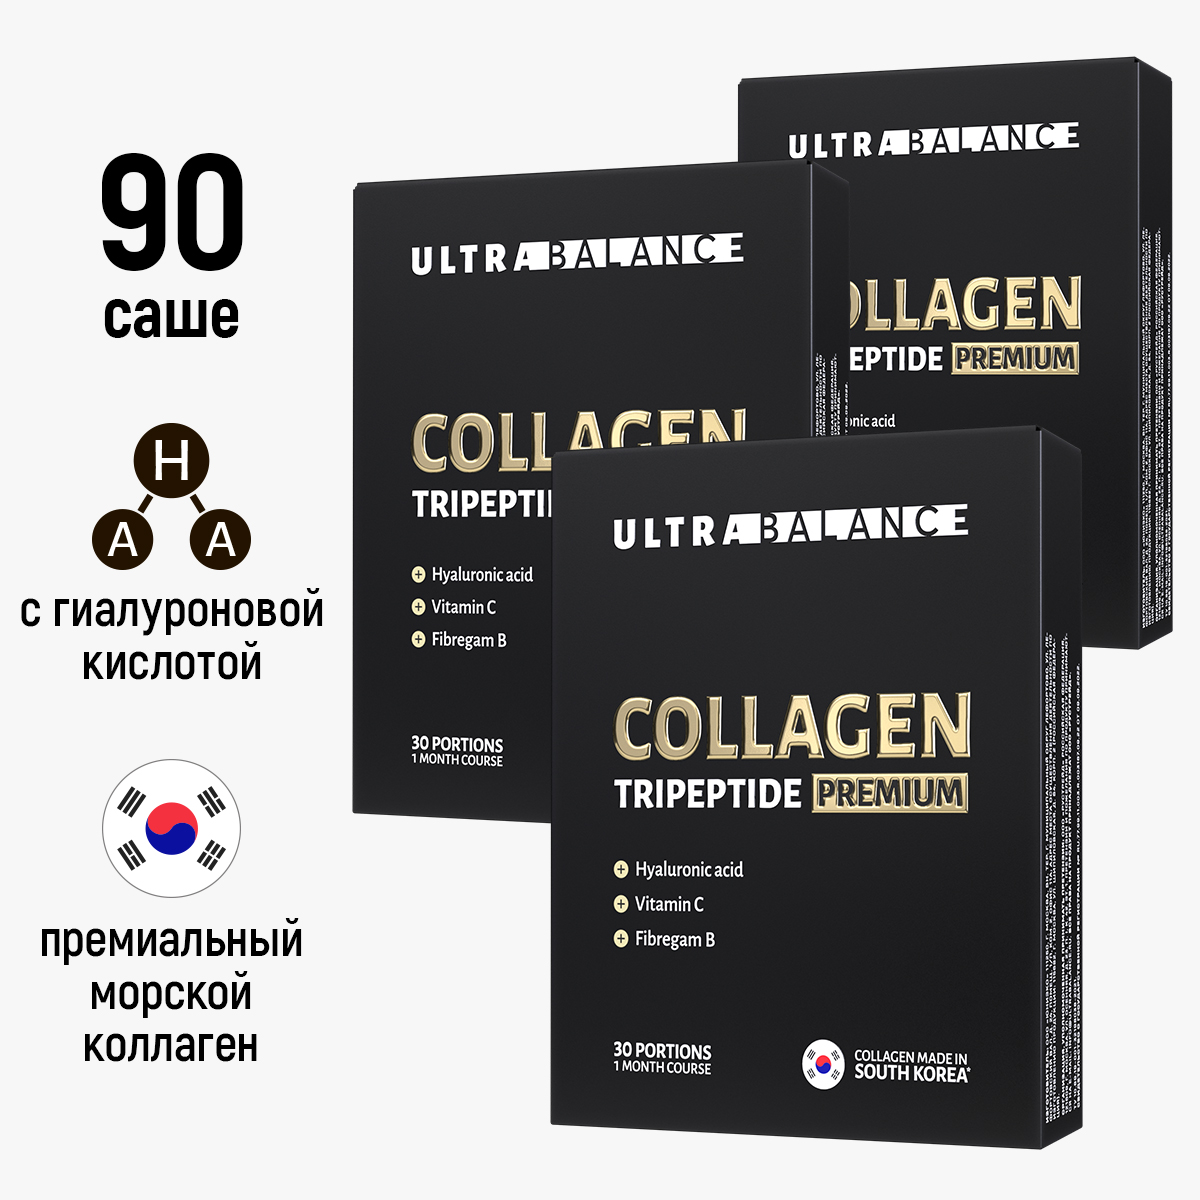 Купить Collagen Tripeptide Premium порошок, Коллаген UltraBalance Tripeptide Premium порошок саше 90 шт, Россия